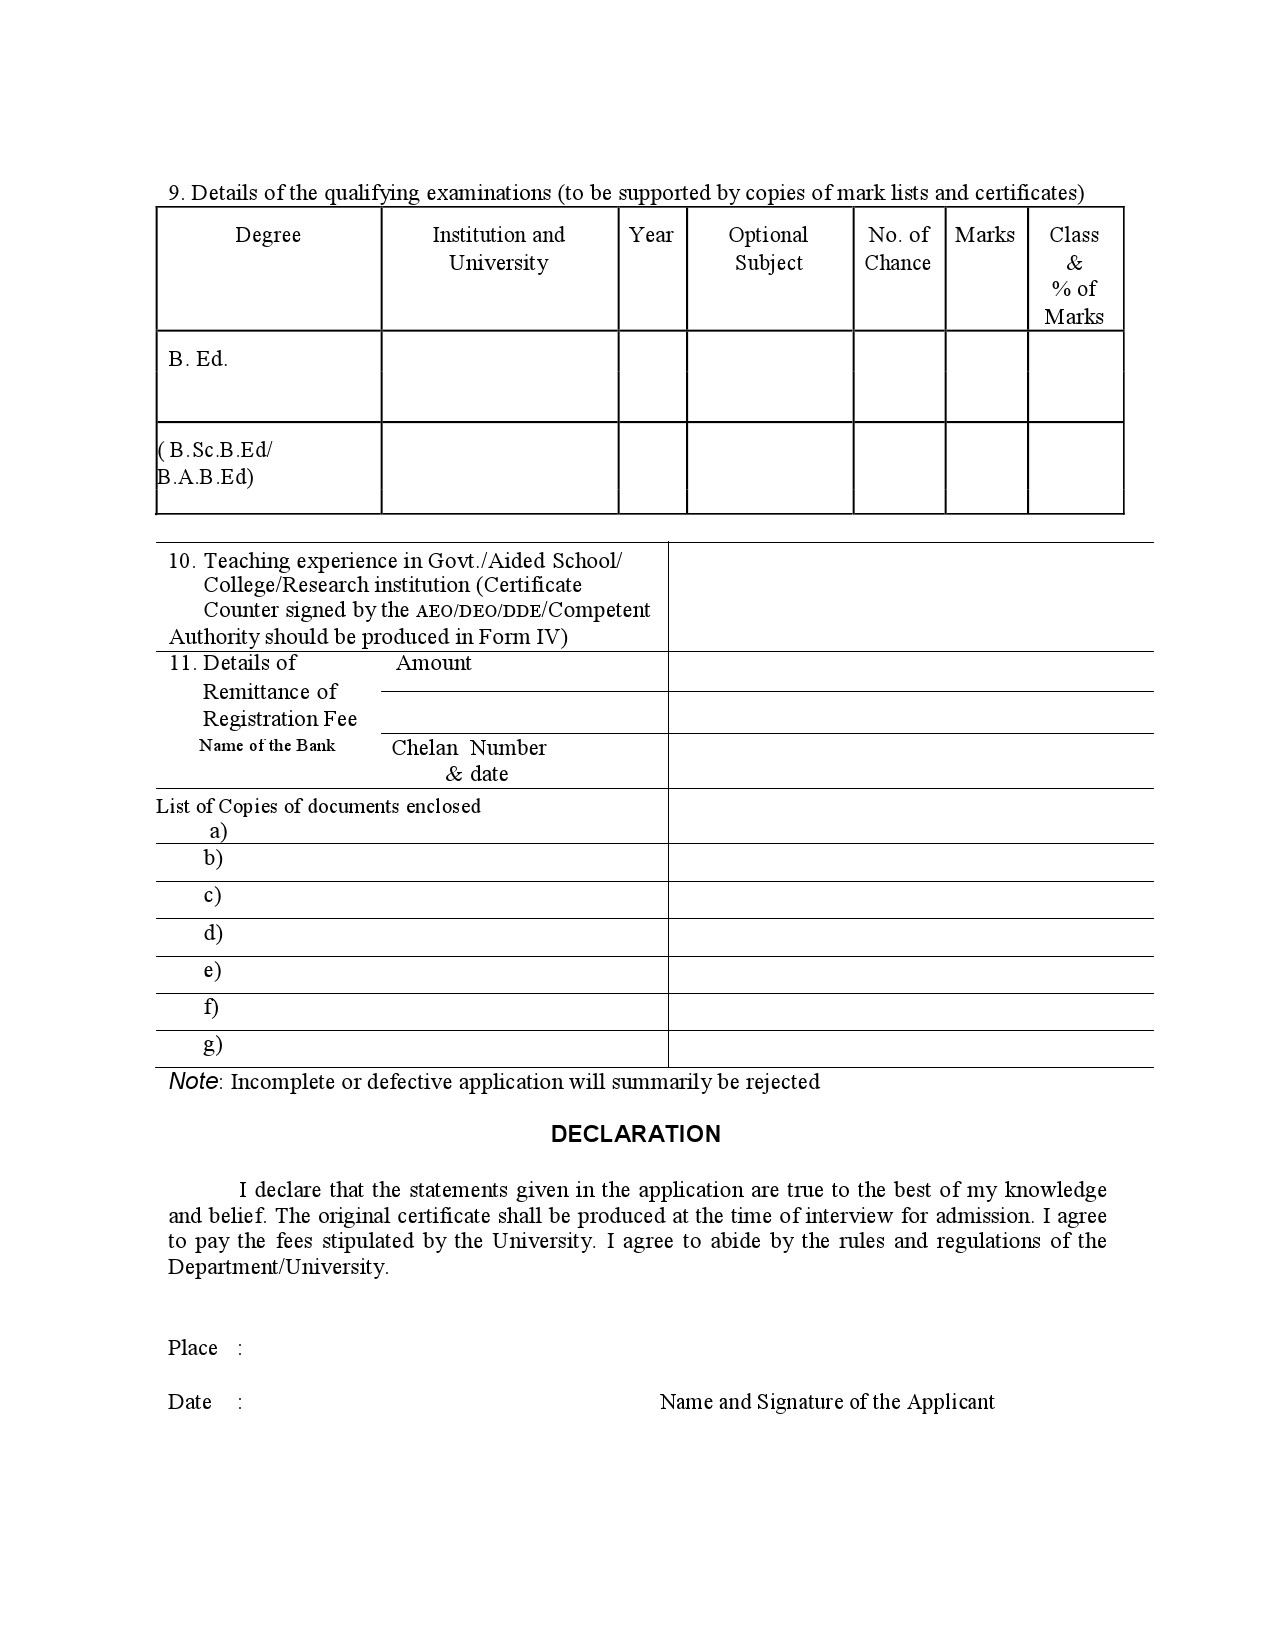 Kannur University M Ed Admission Prospectus 2019 - Notification Image 7